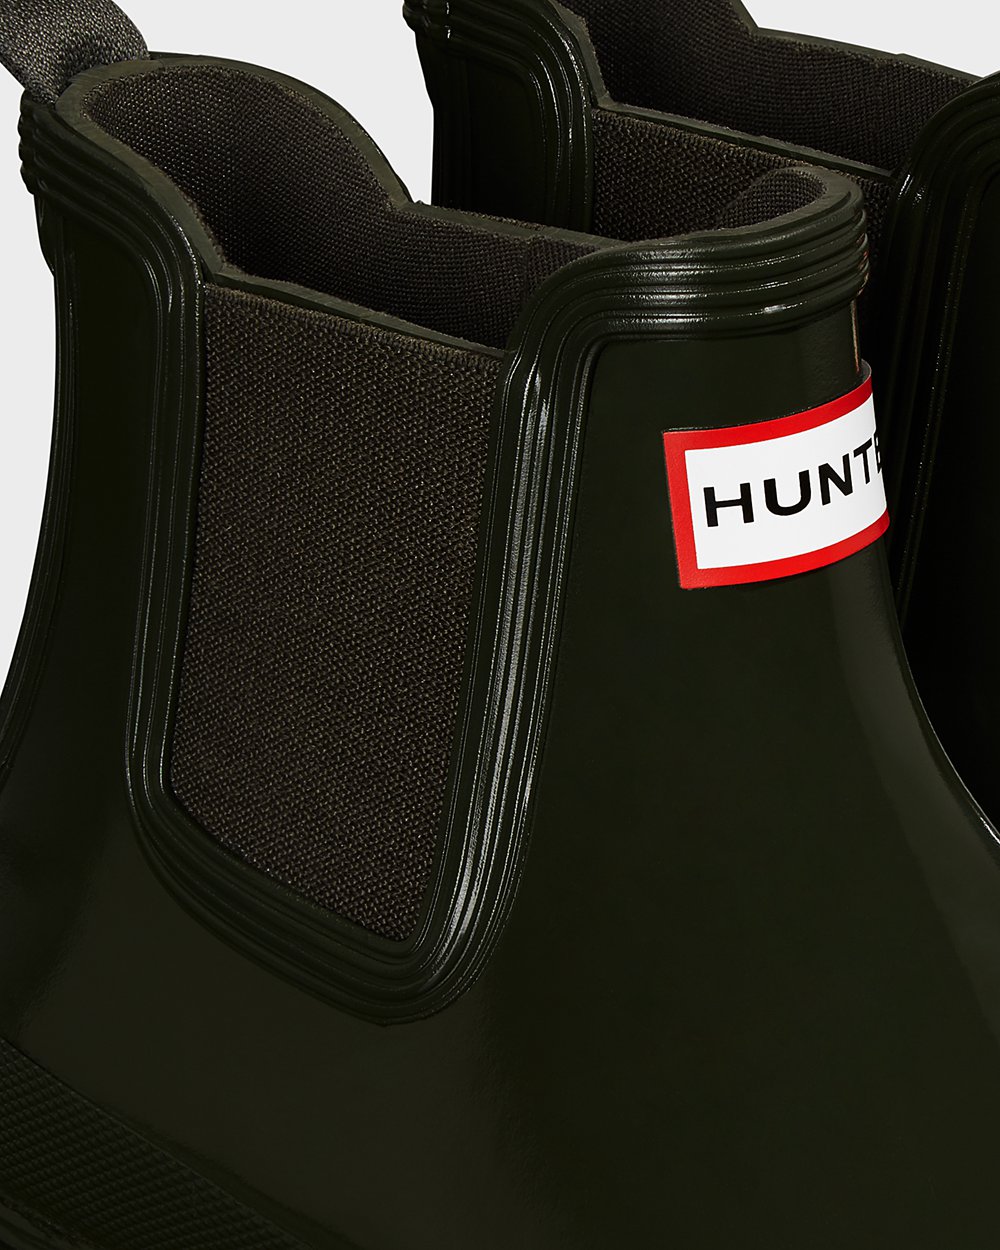 Womens Chelsea Boots - Hunter Original Gloss (43FELMJTX) - Dark Olive